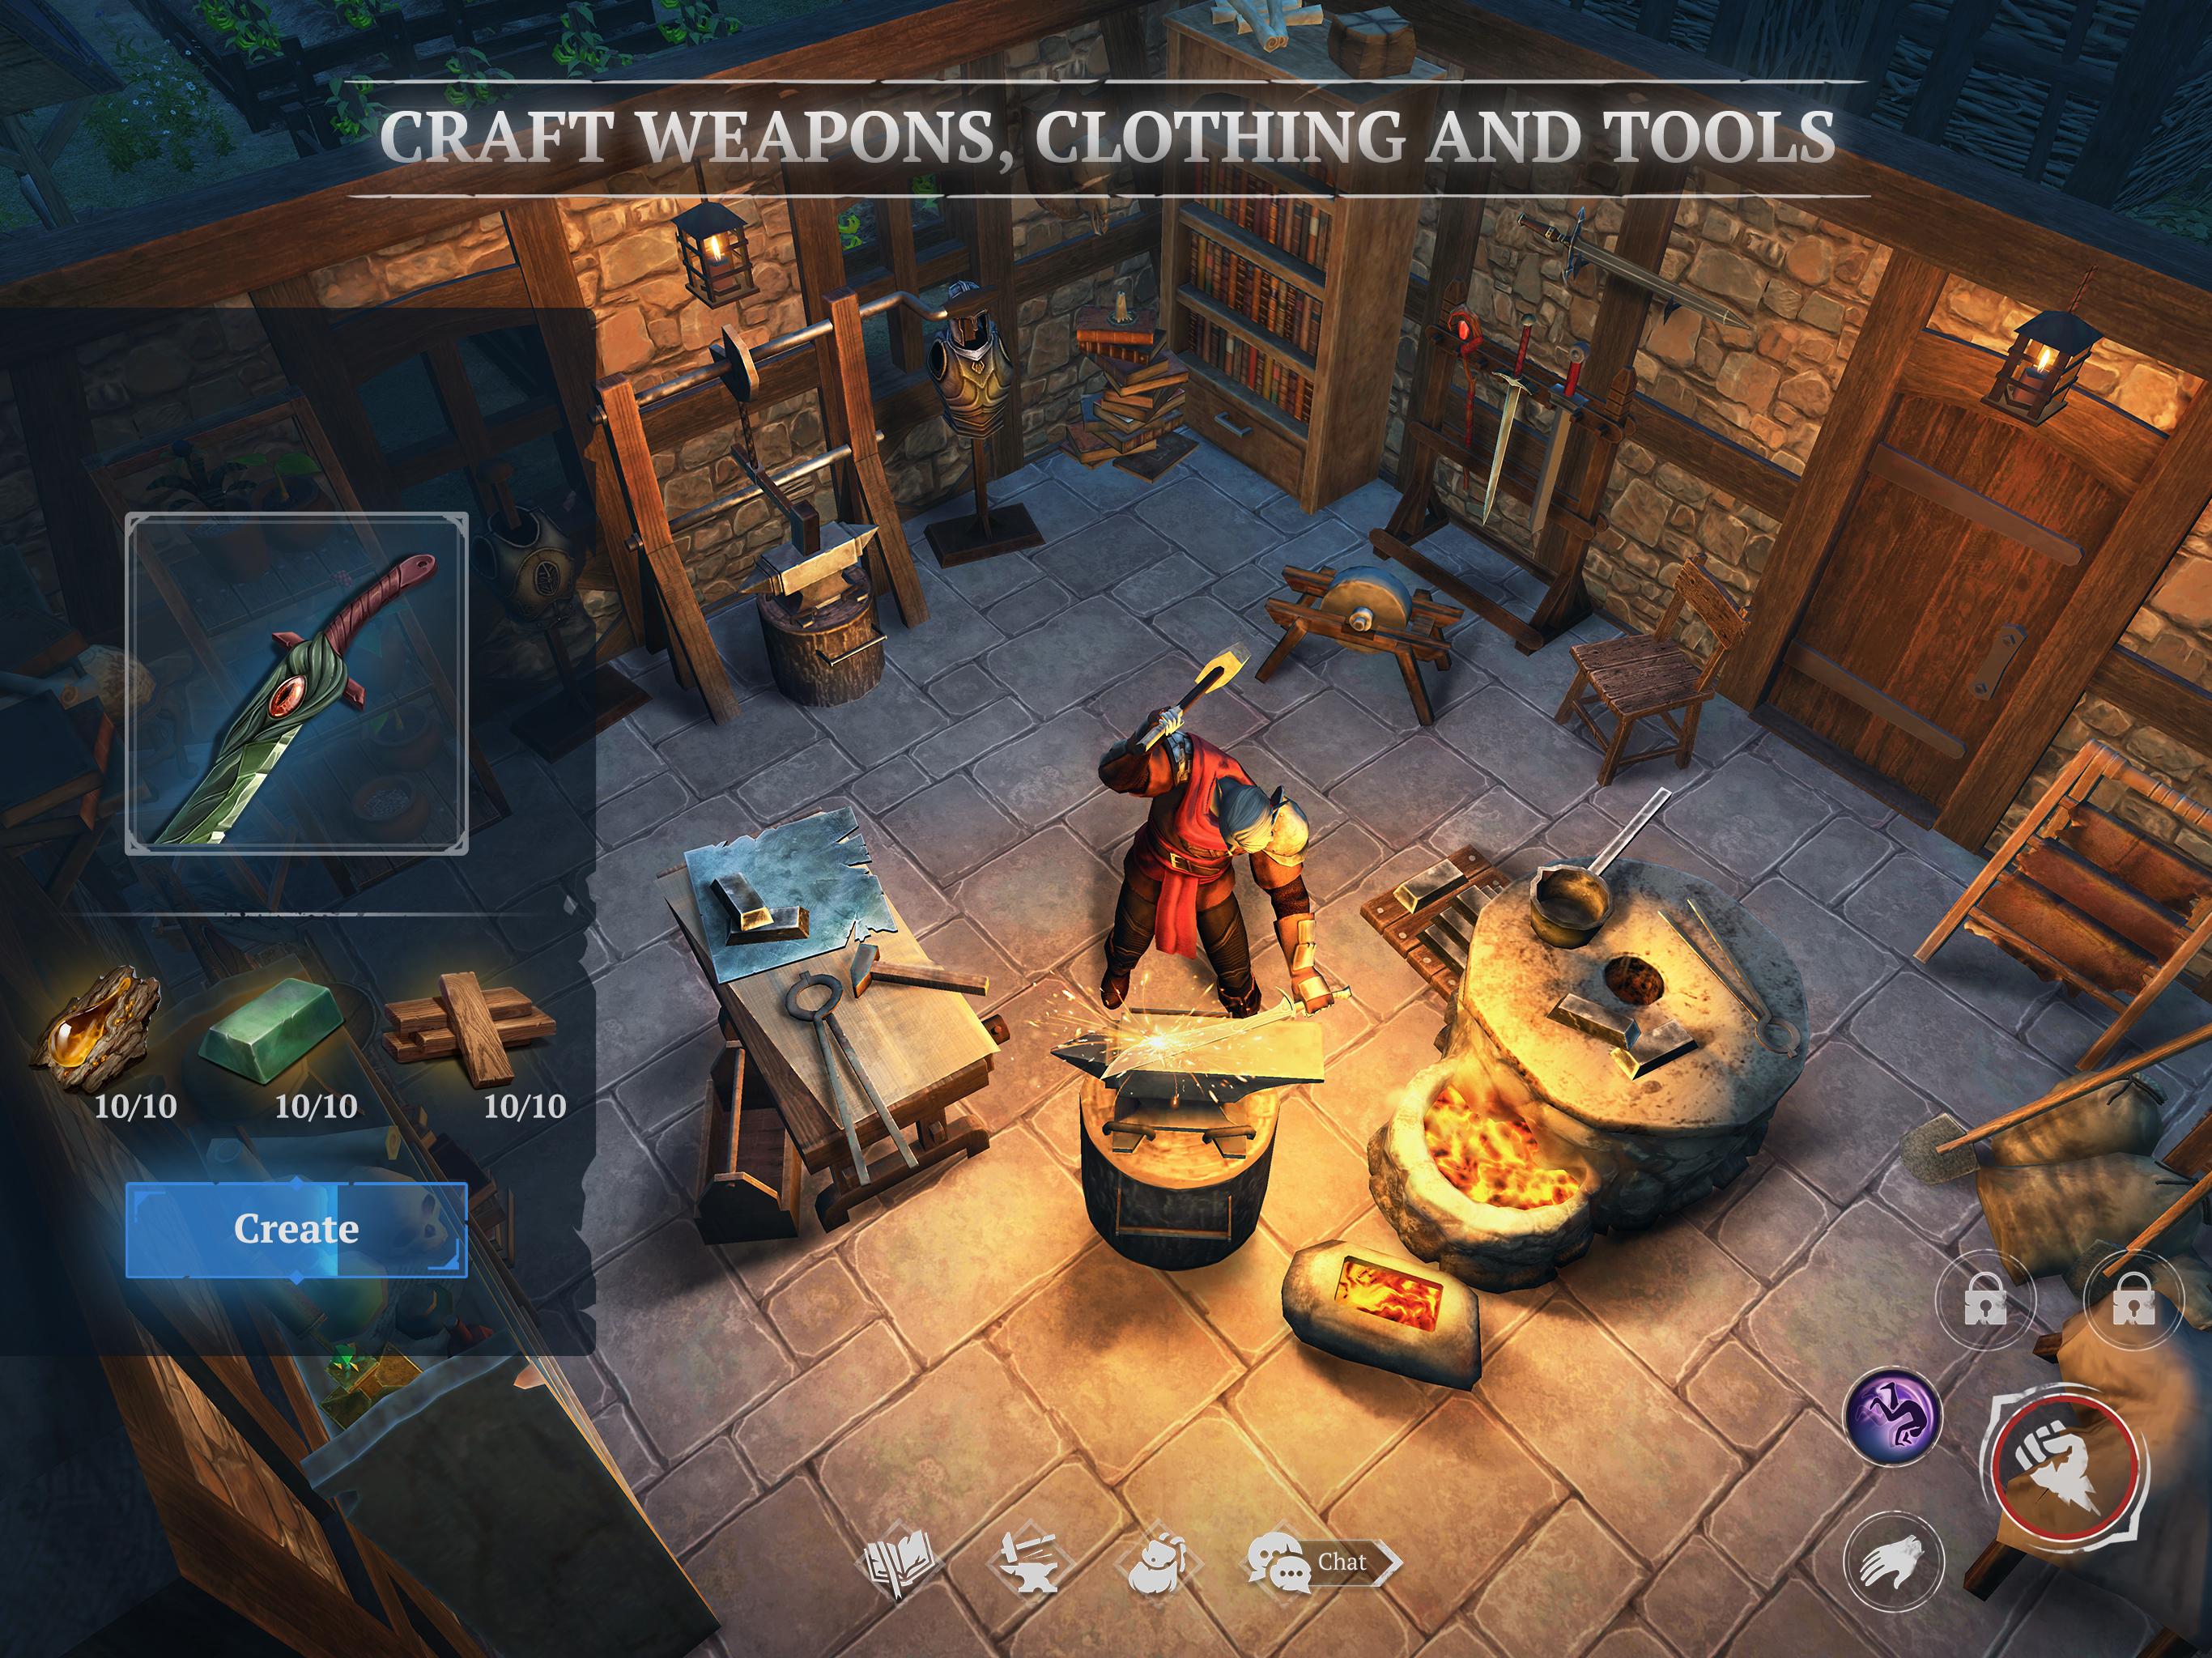 Download & Play Survivalcraft 2 on PC & Mac (Emulator)